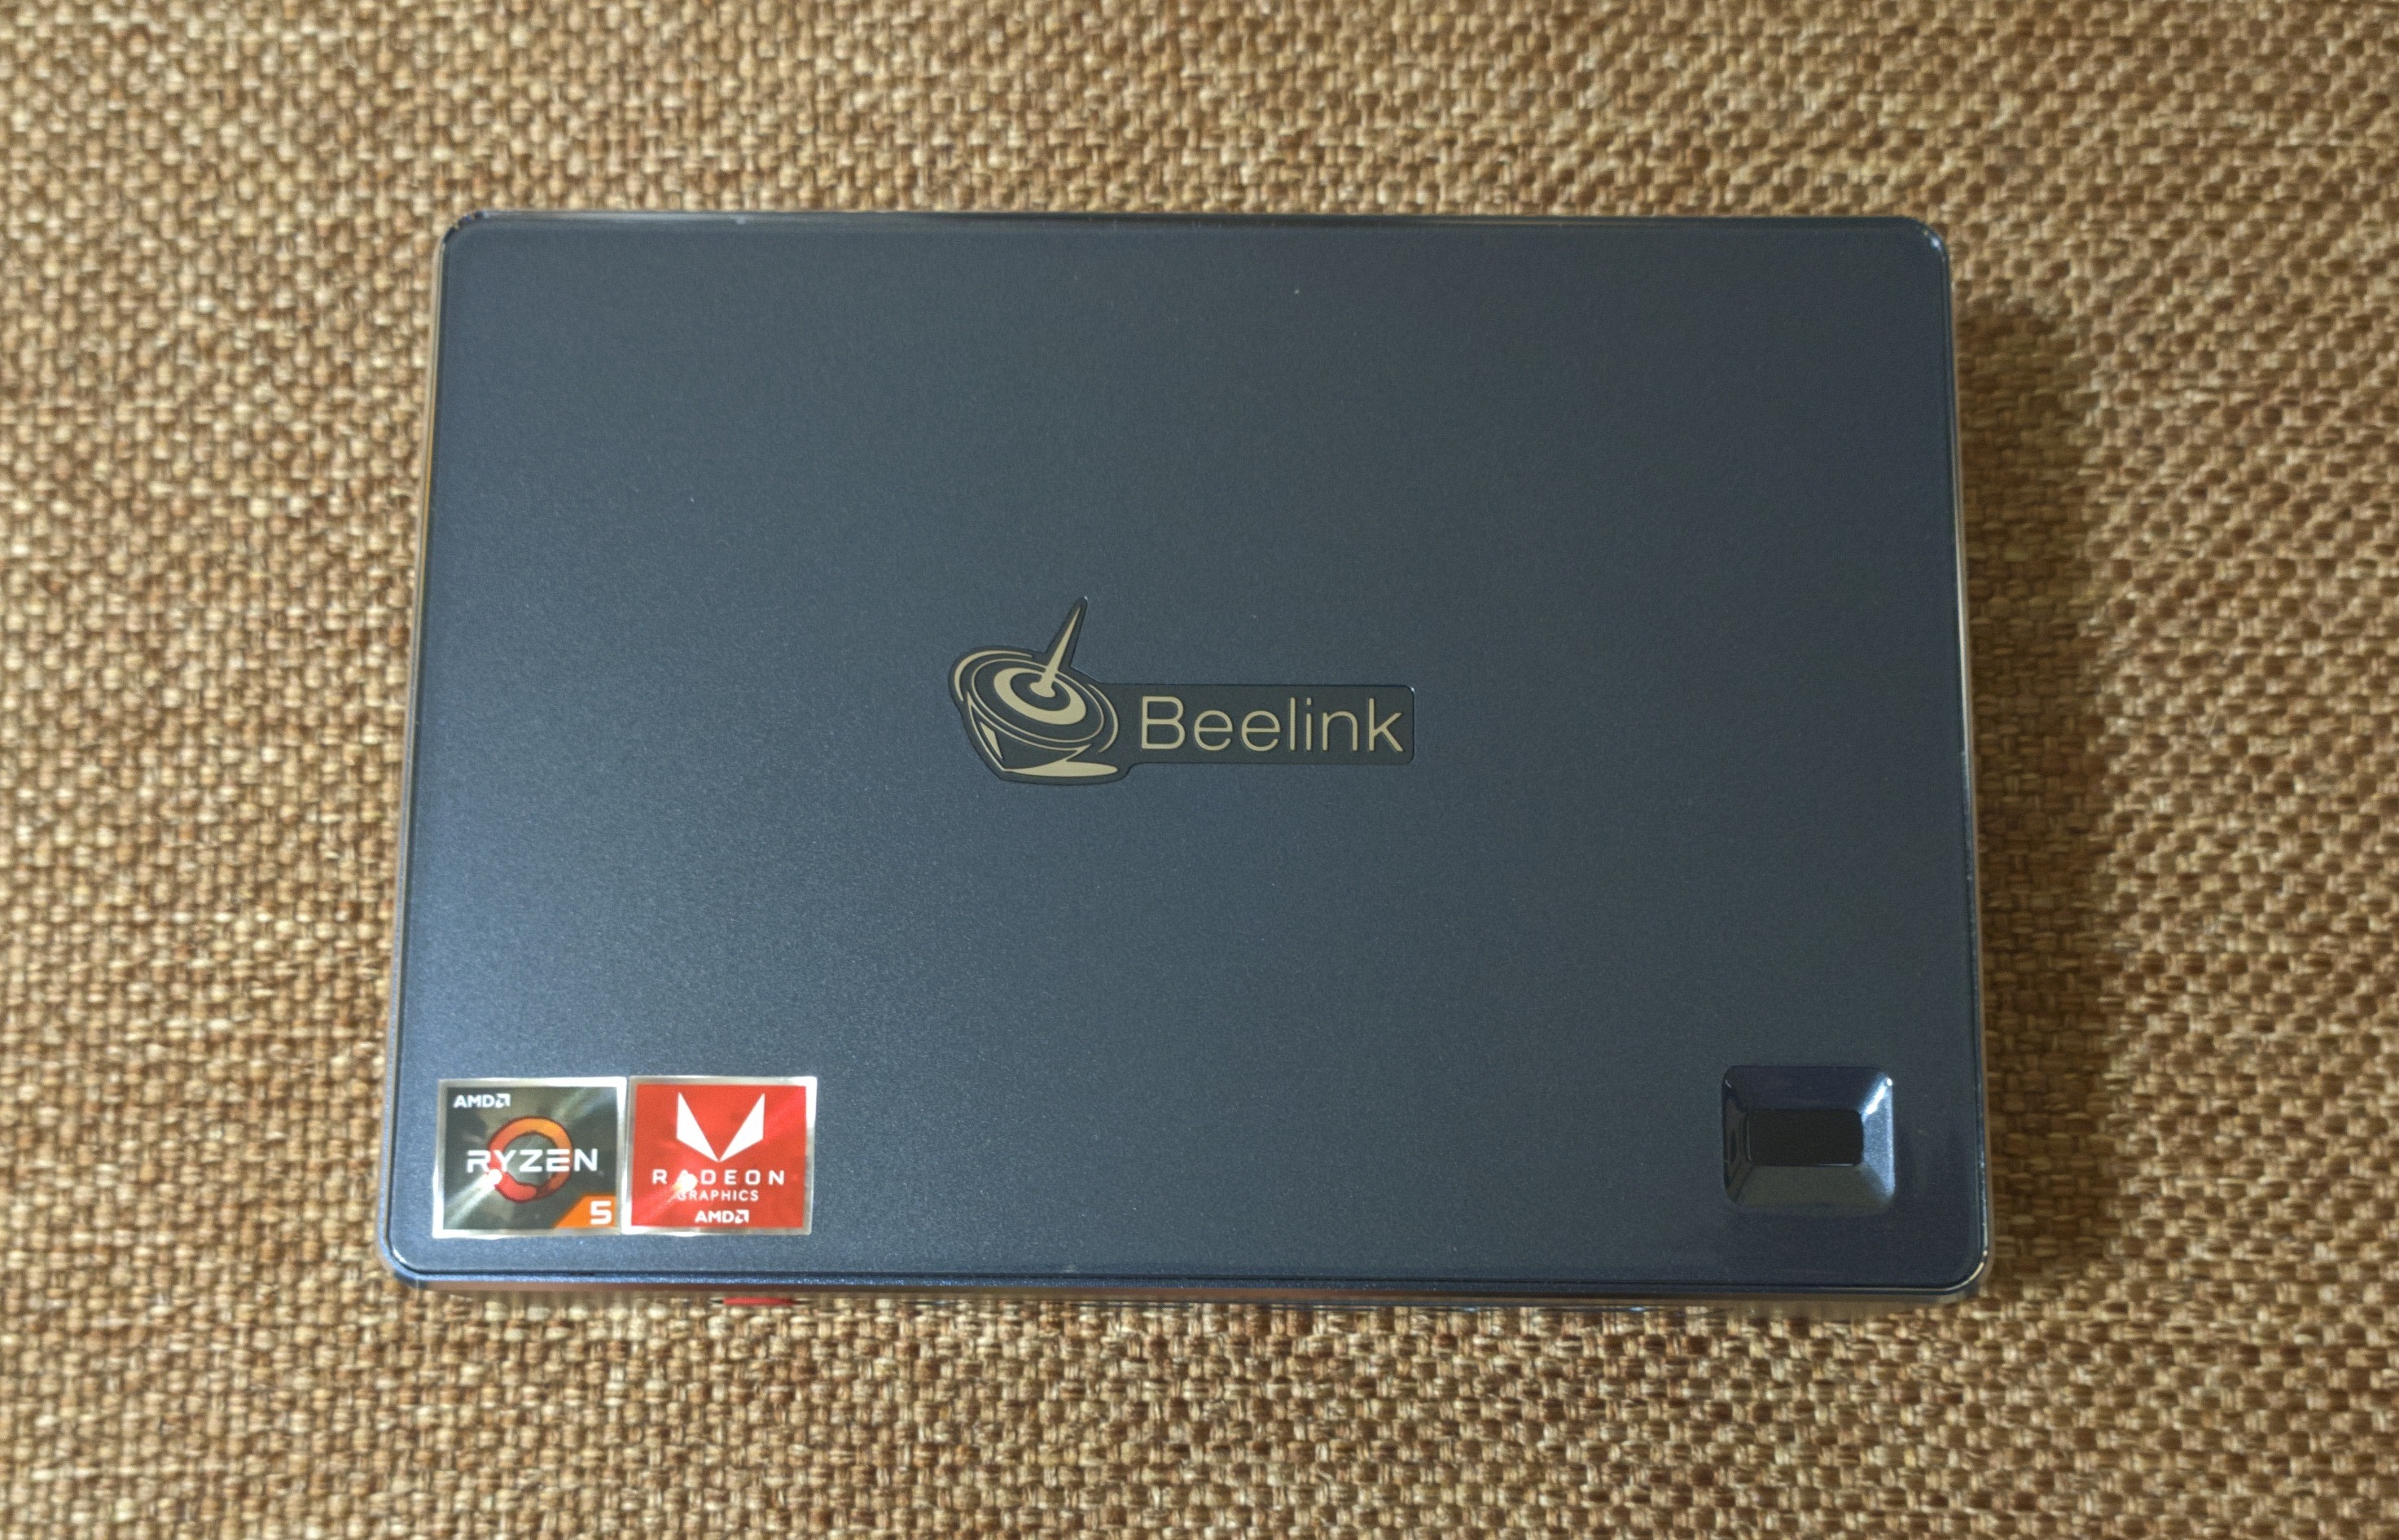 2022 Beelink Mini s inside. Beelink Mini PC ser5. Beelink мини-ПК ser5 Max фото. Beelink GTR 7 Pro купить в Москве. Мини пк beelink ser5 amd ryzen